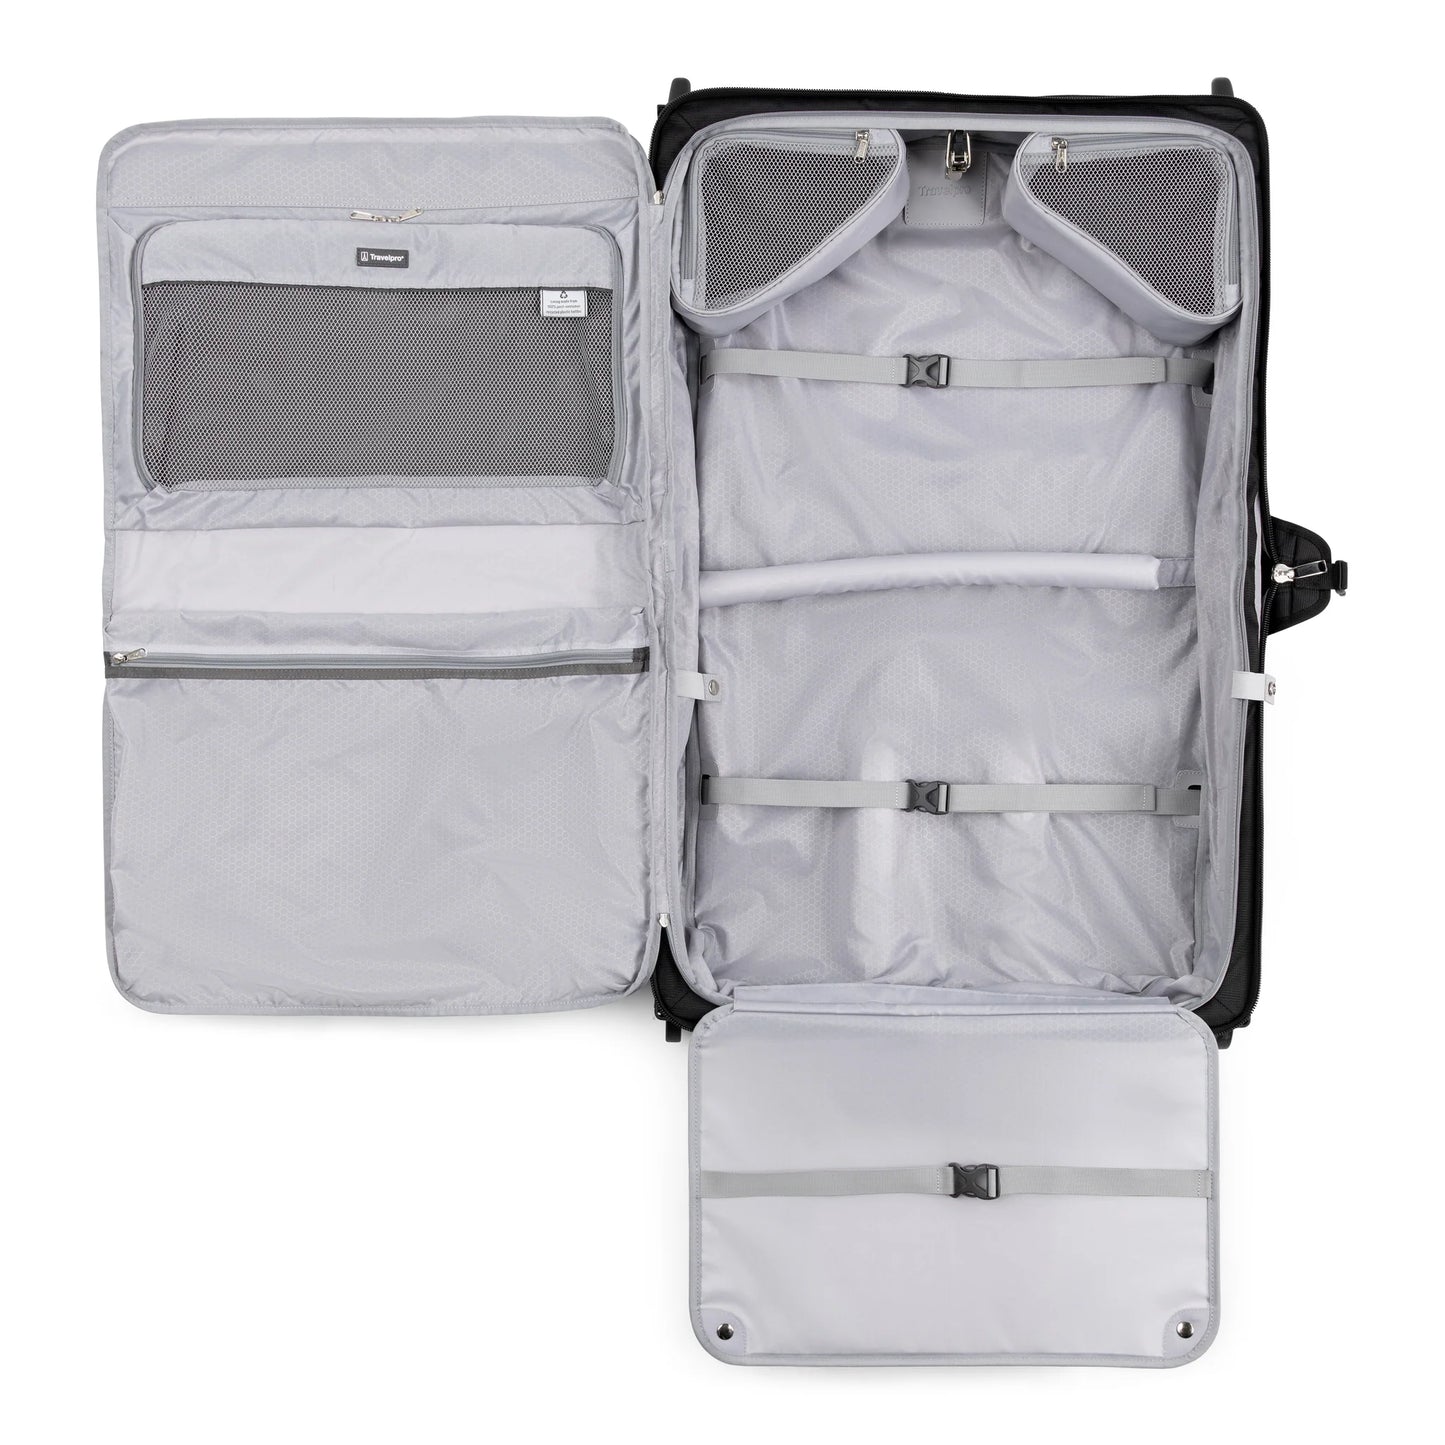 Maxlite® 5 Carry-On Rolling Garment Bag- 4011740